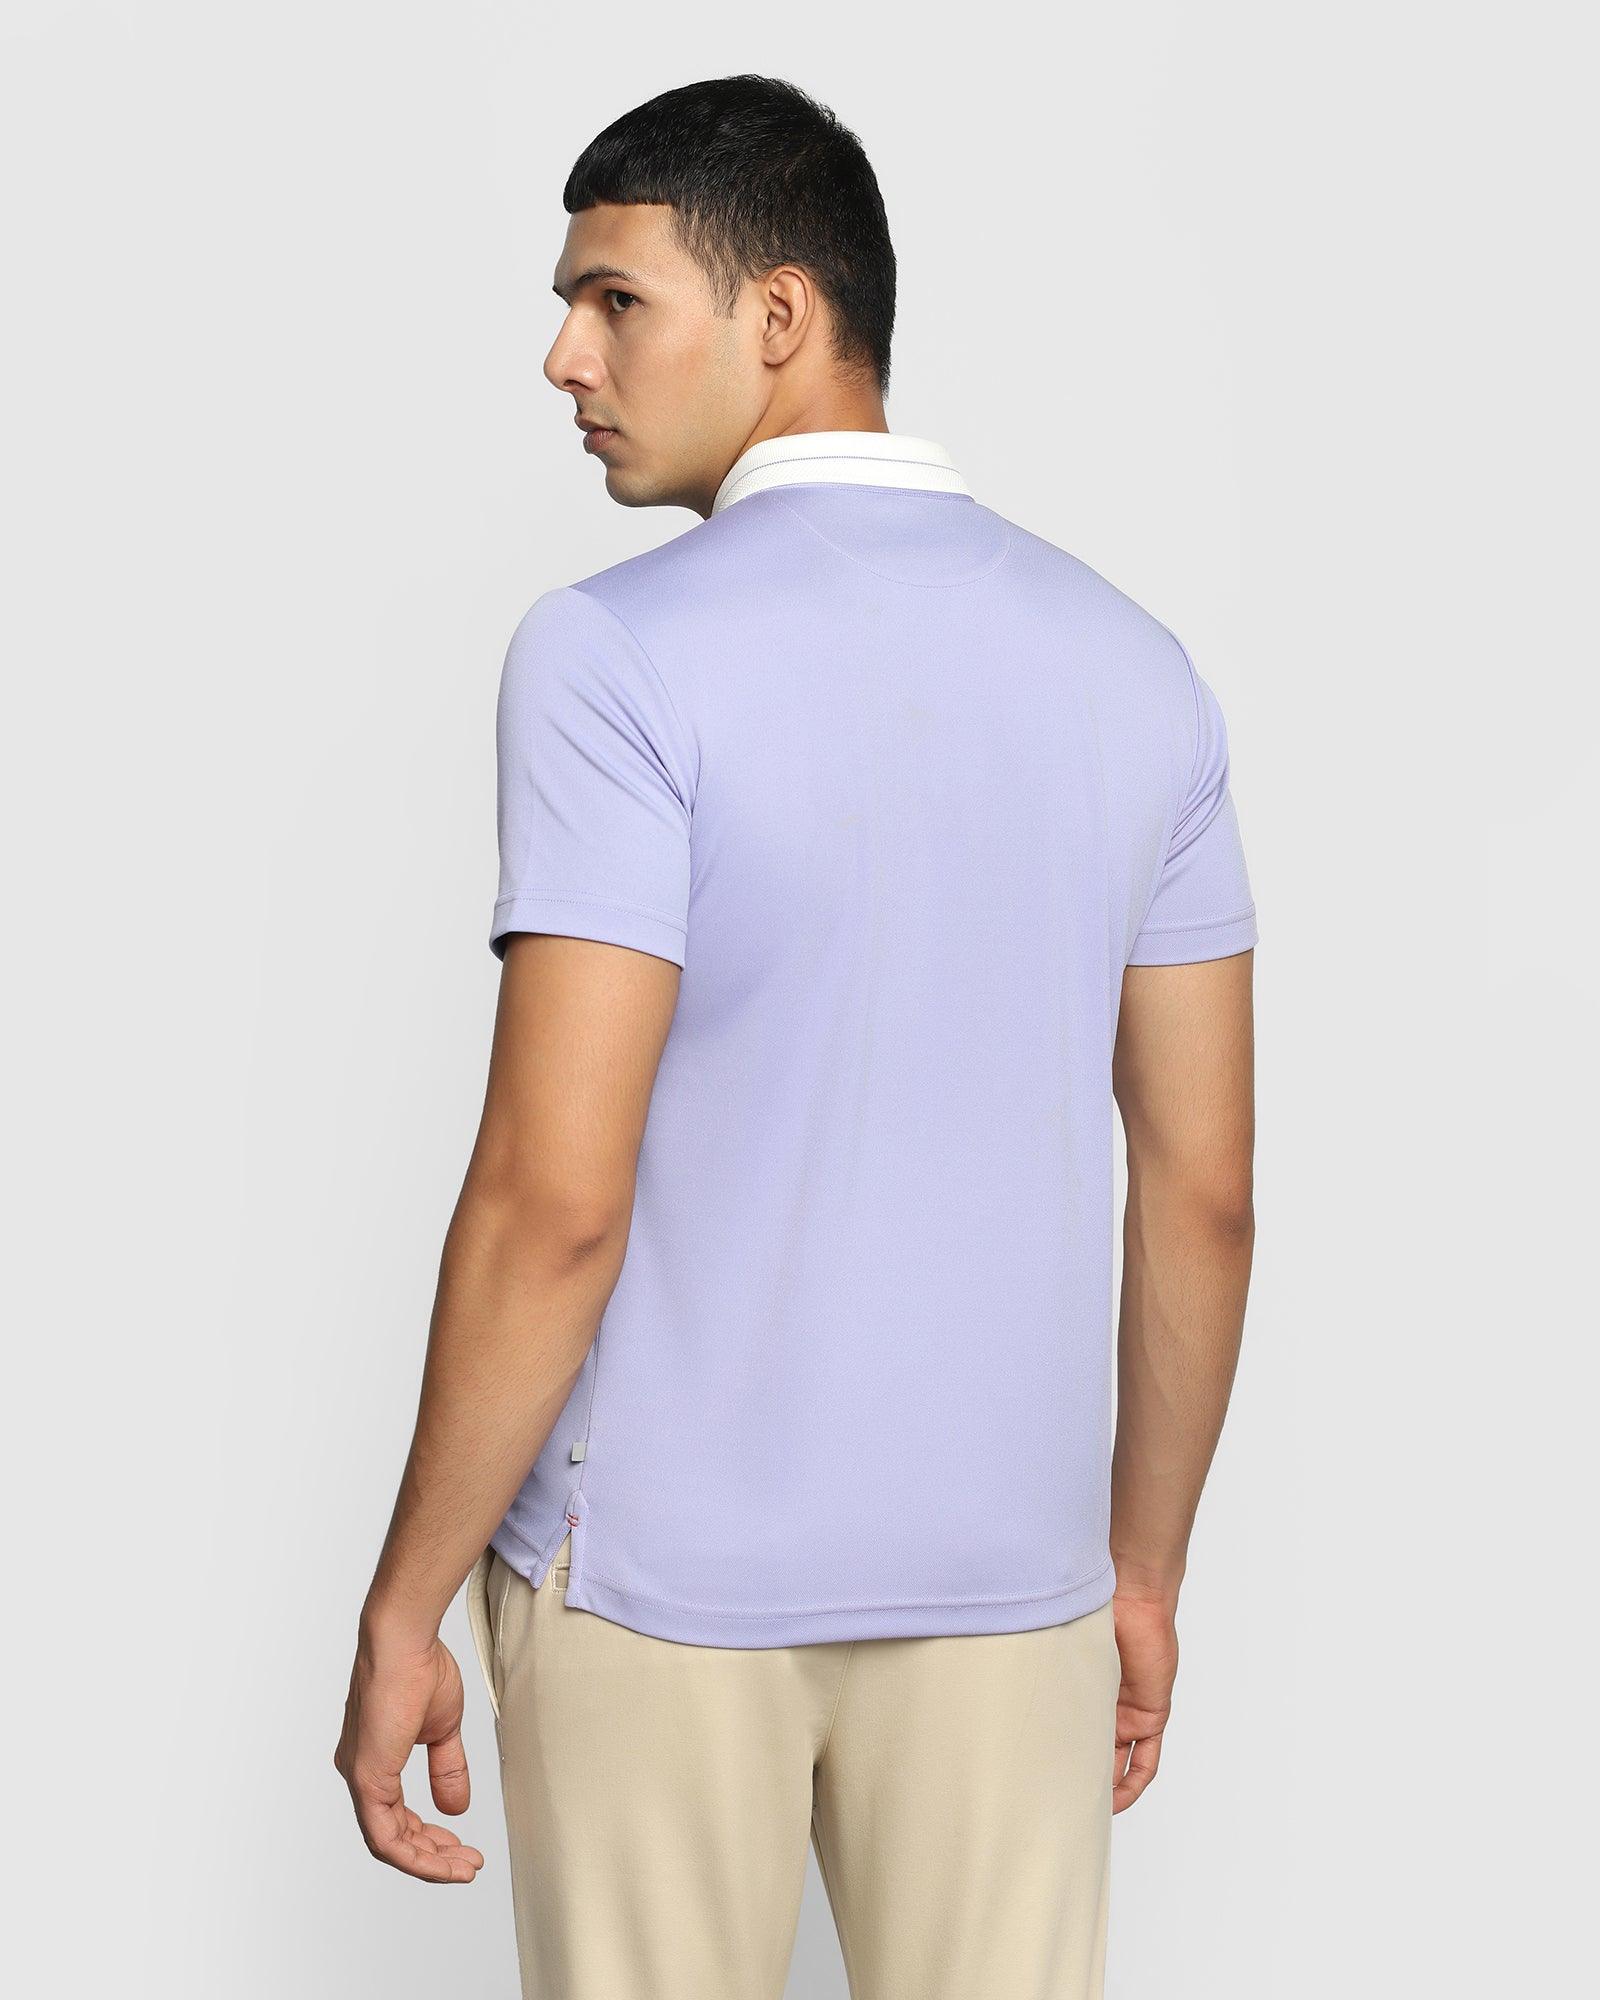 TechPro Polo Lilac Purple Solid T-Shirt - Susan